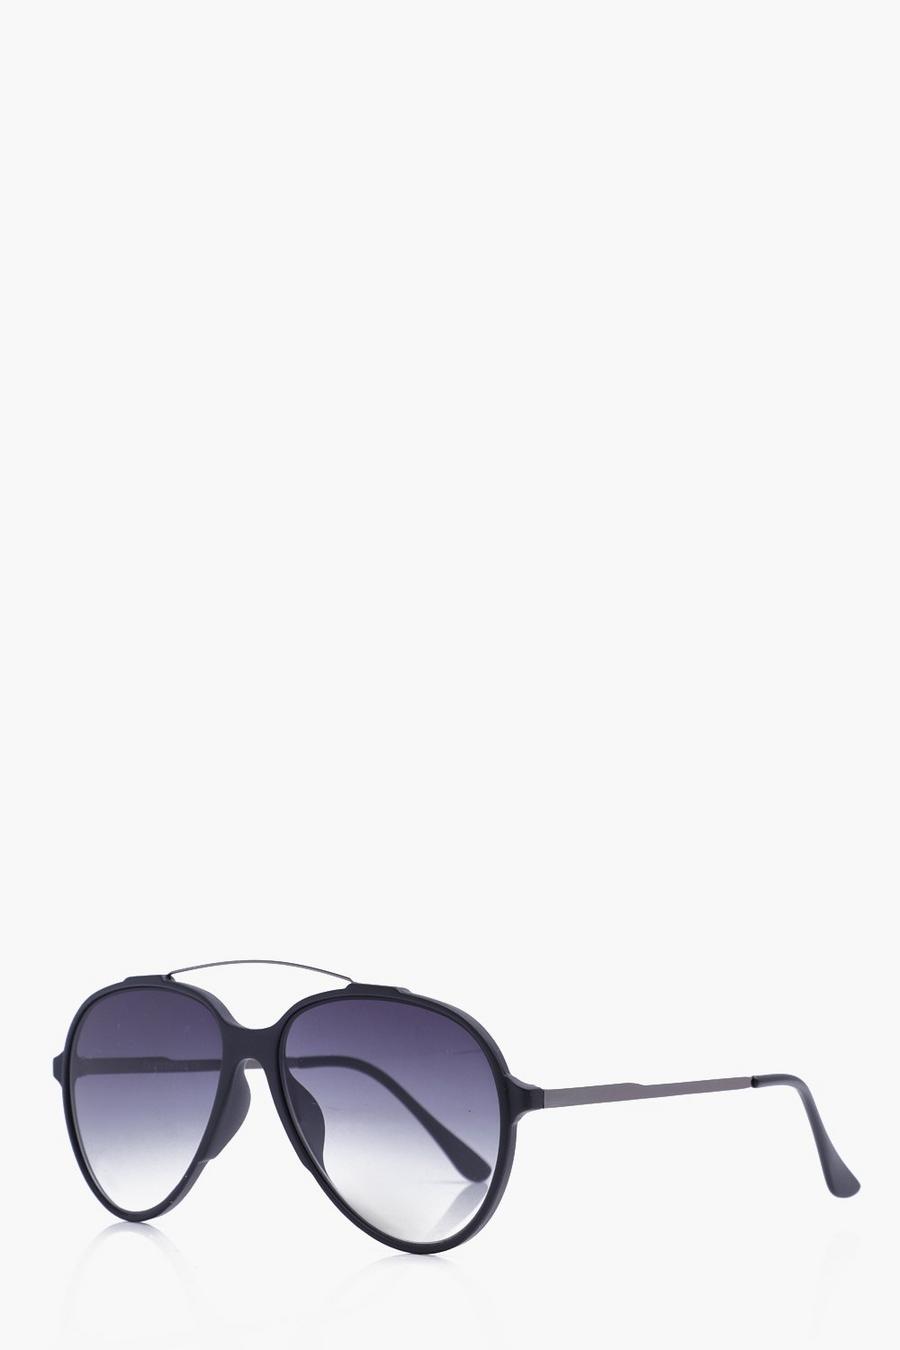 Verblasste schwarze Piloten-Sonnenbrille image number 1